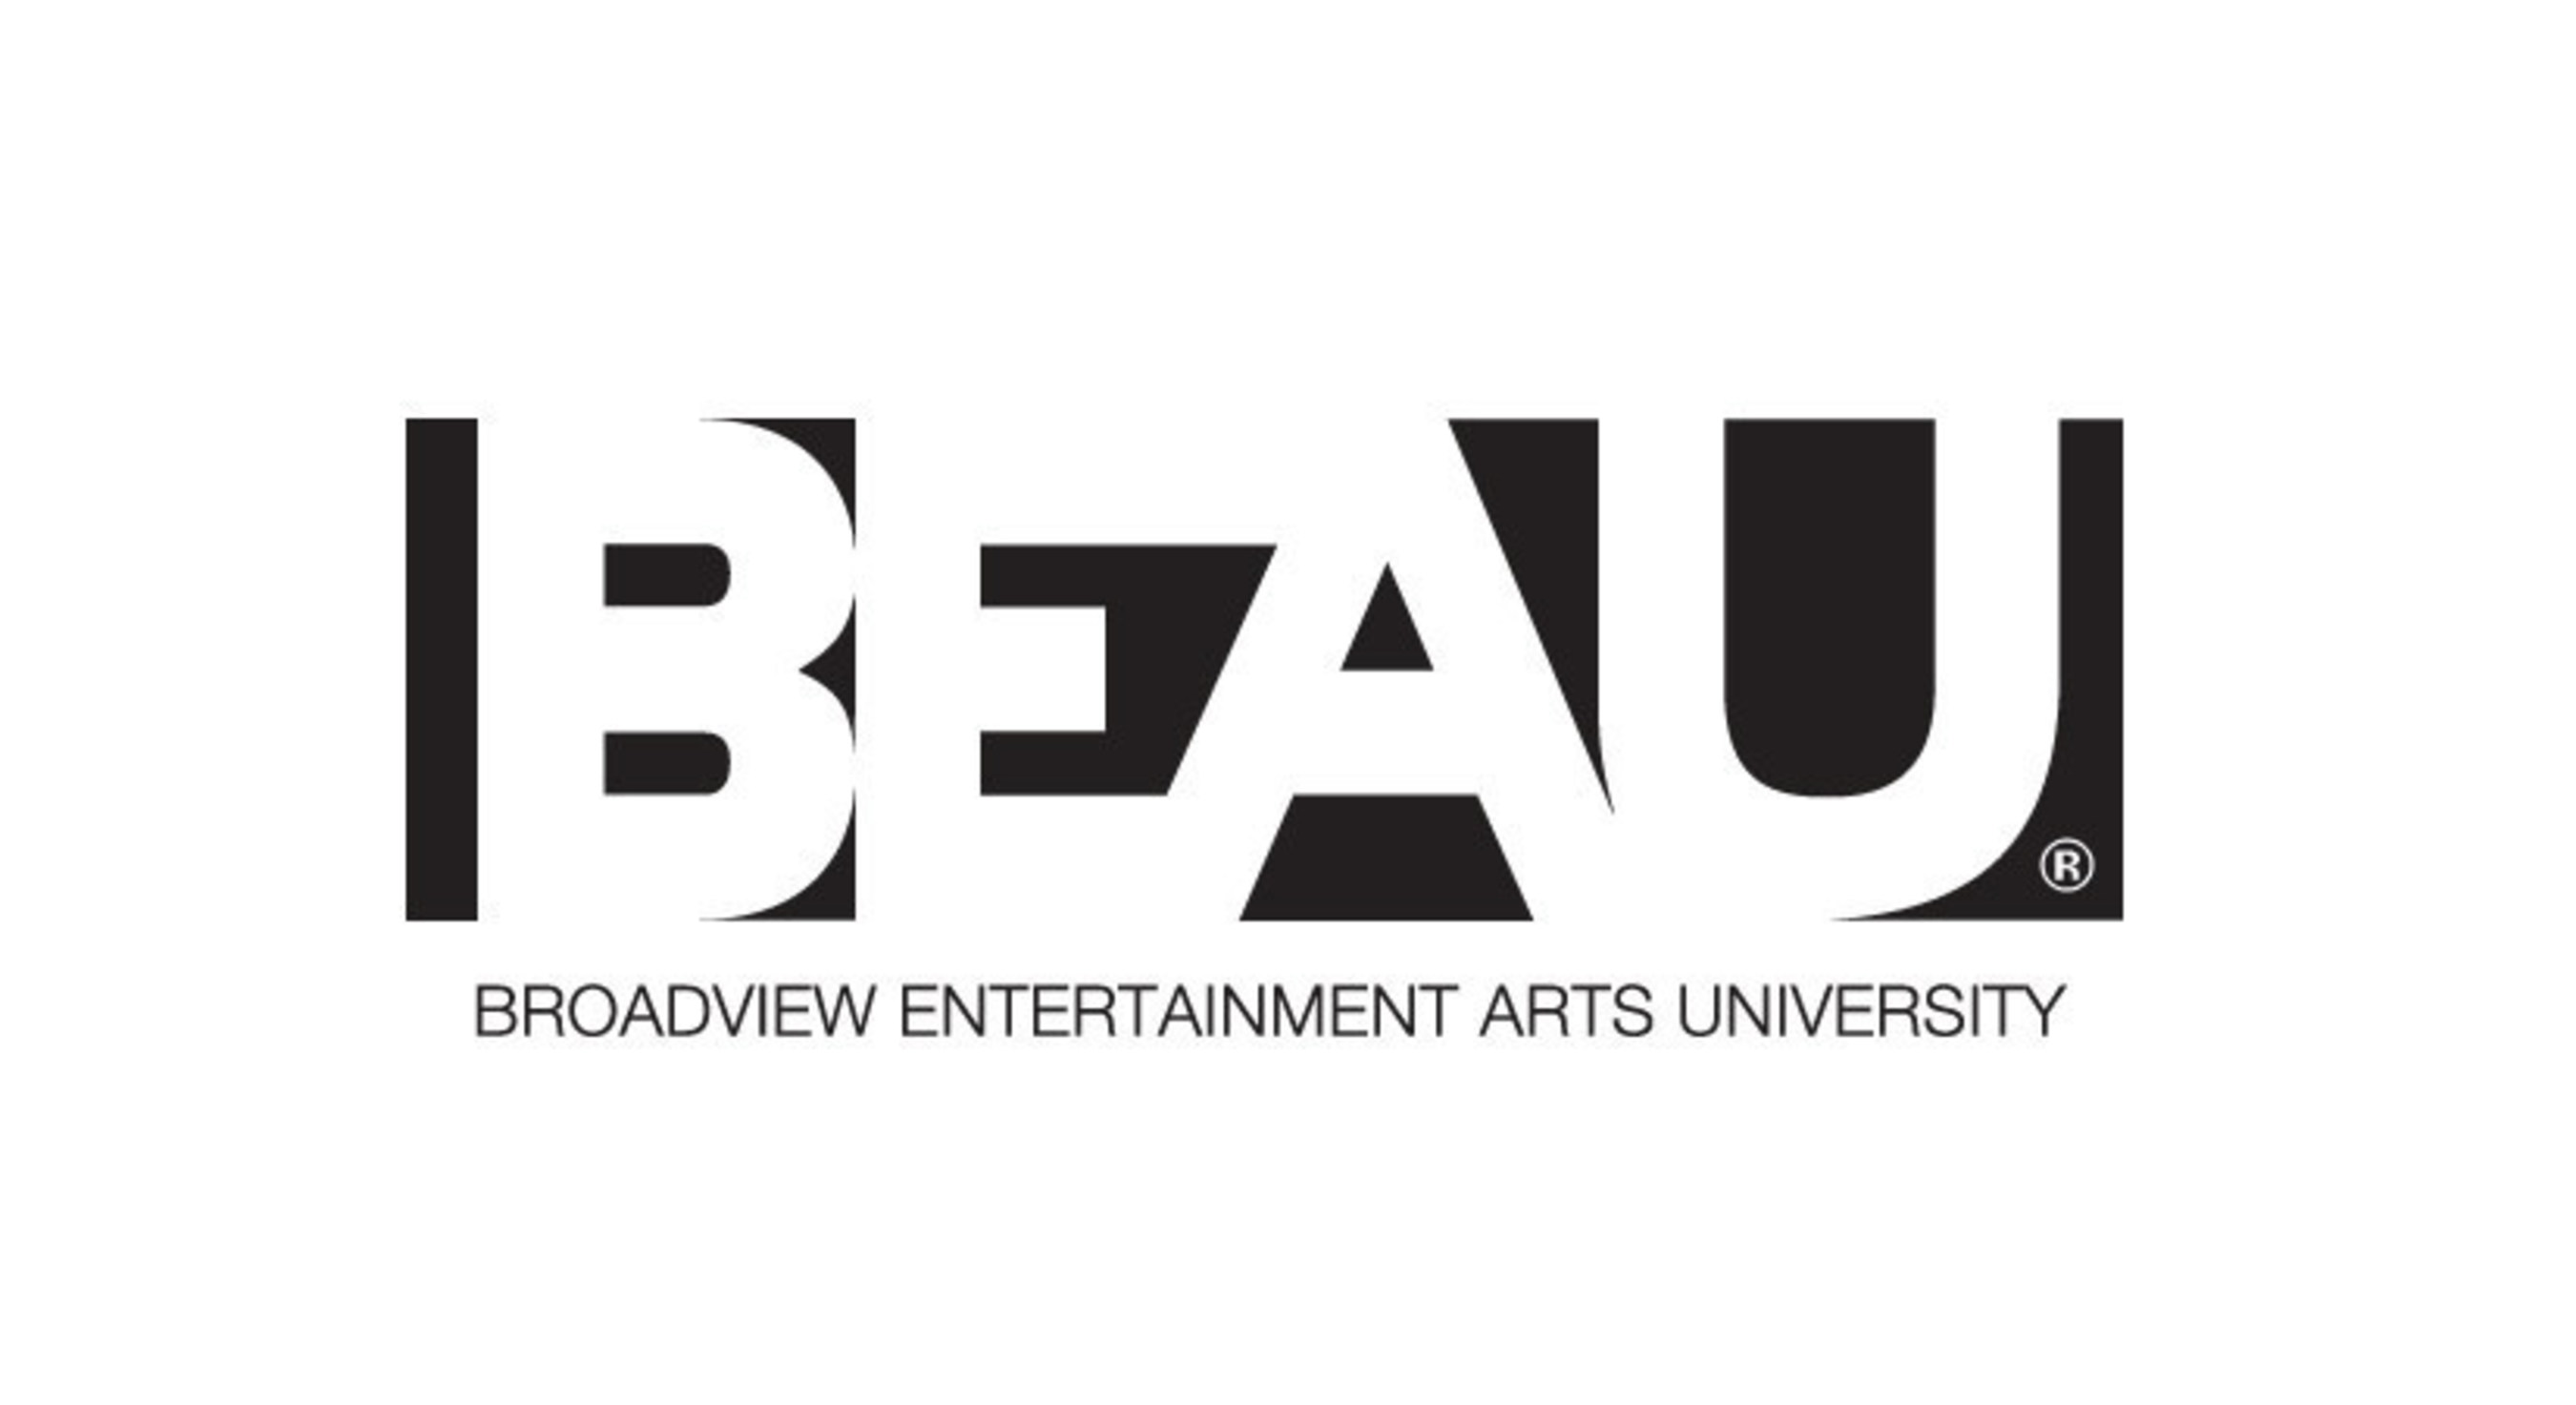 Broadview Entertainment Arts University logo (PRNewsFoto/Broadview Entertainment Arts) (PRNewsFoto/Broadview Entertainment Arts)